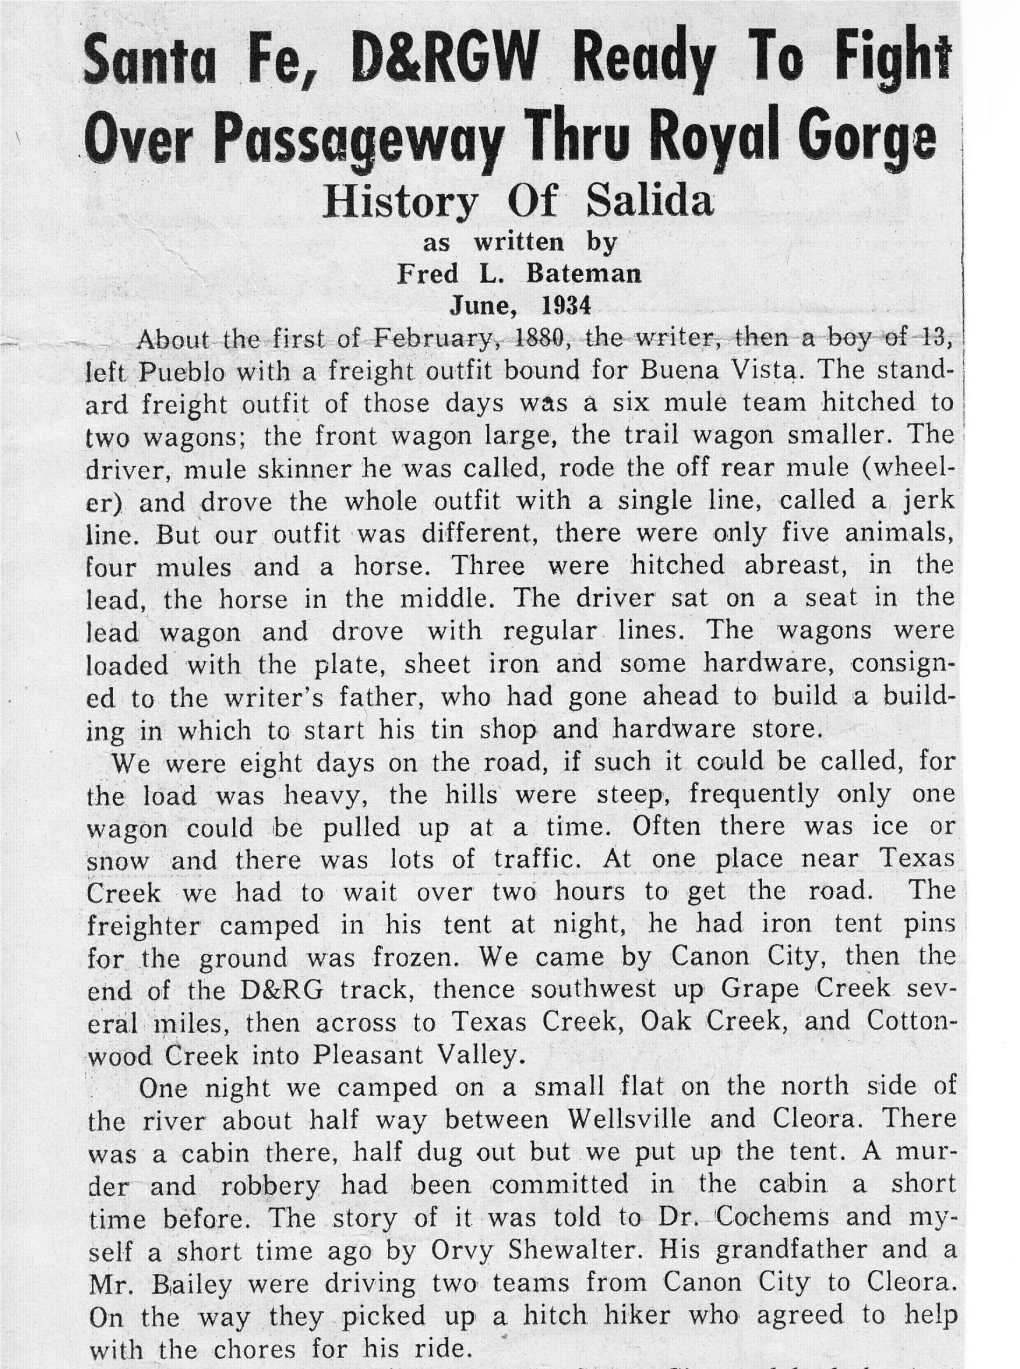 Fred Bateman's History of Salida